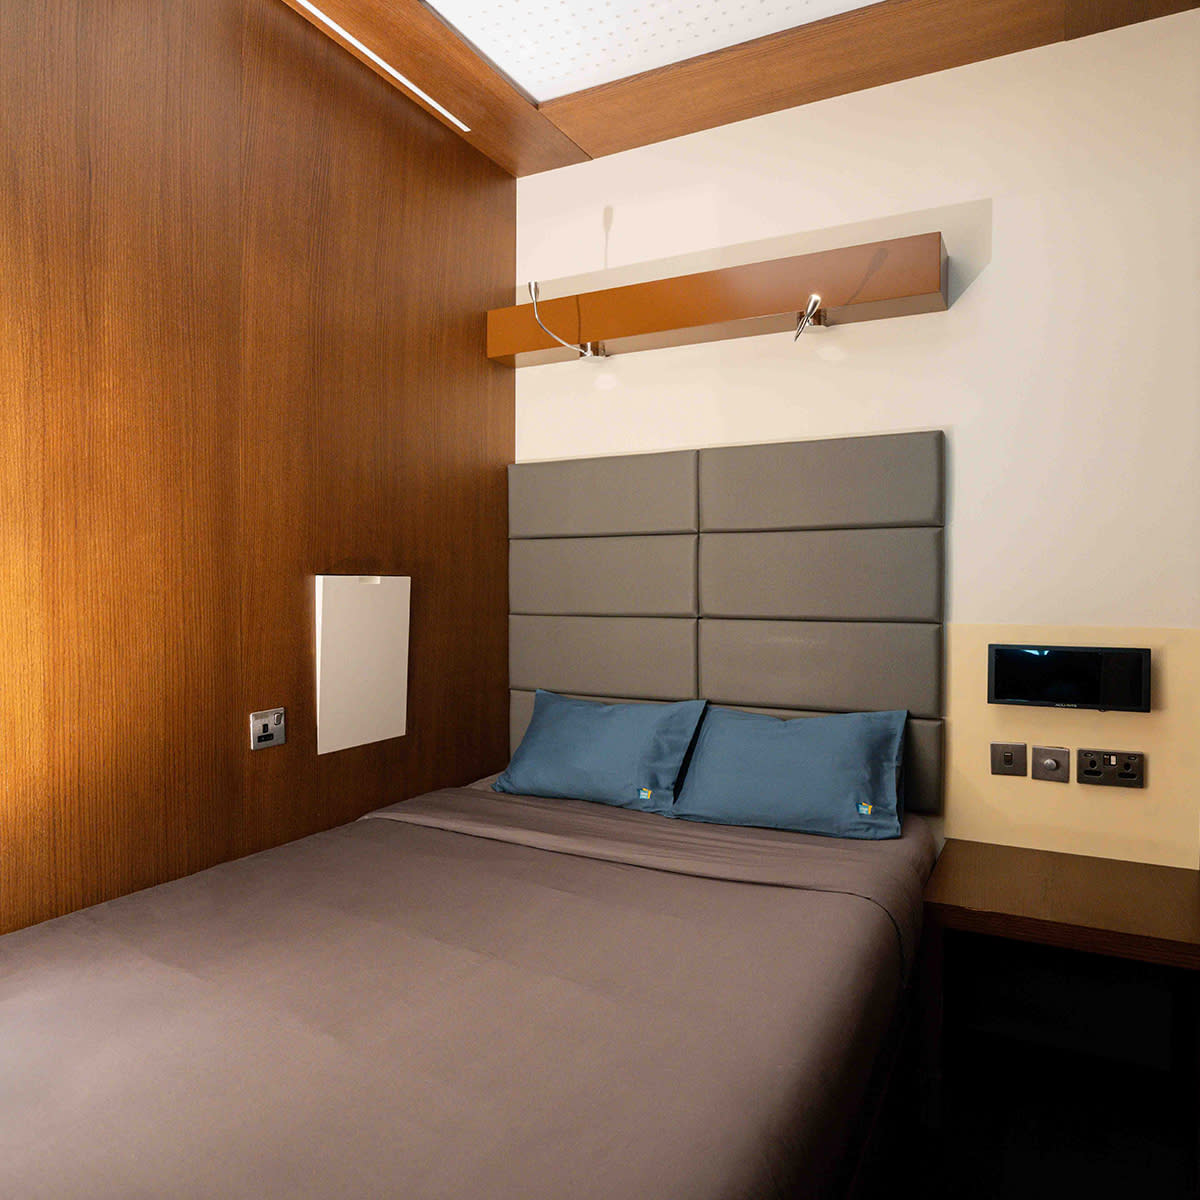 sleep 'n fly, Double Cabin, airport sleep lounge in Dubai